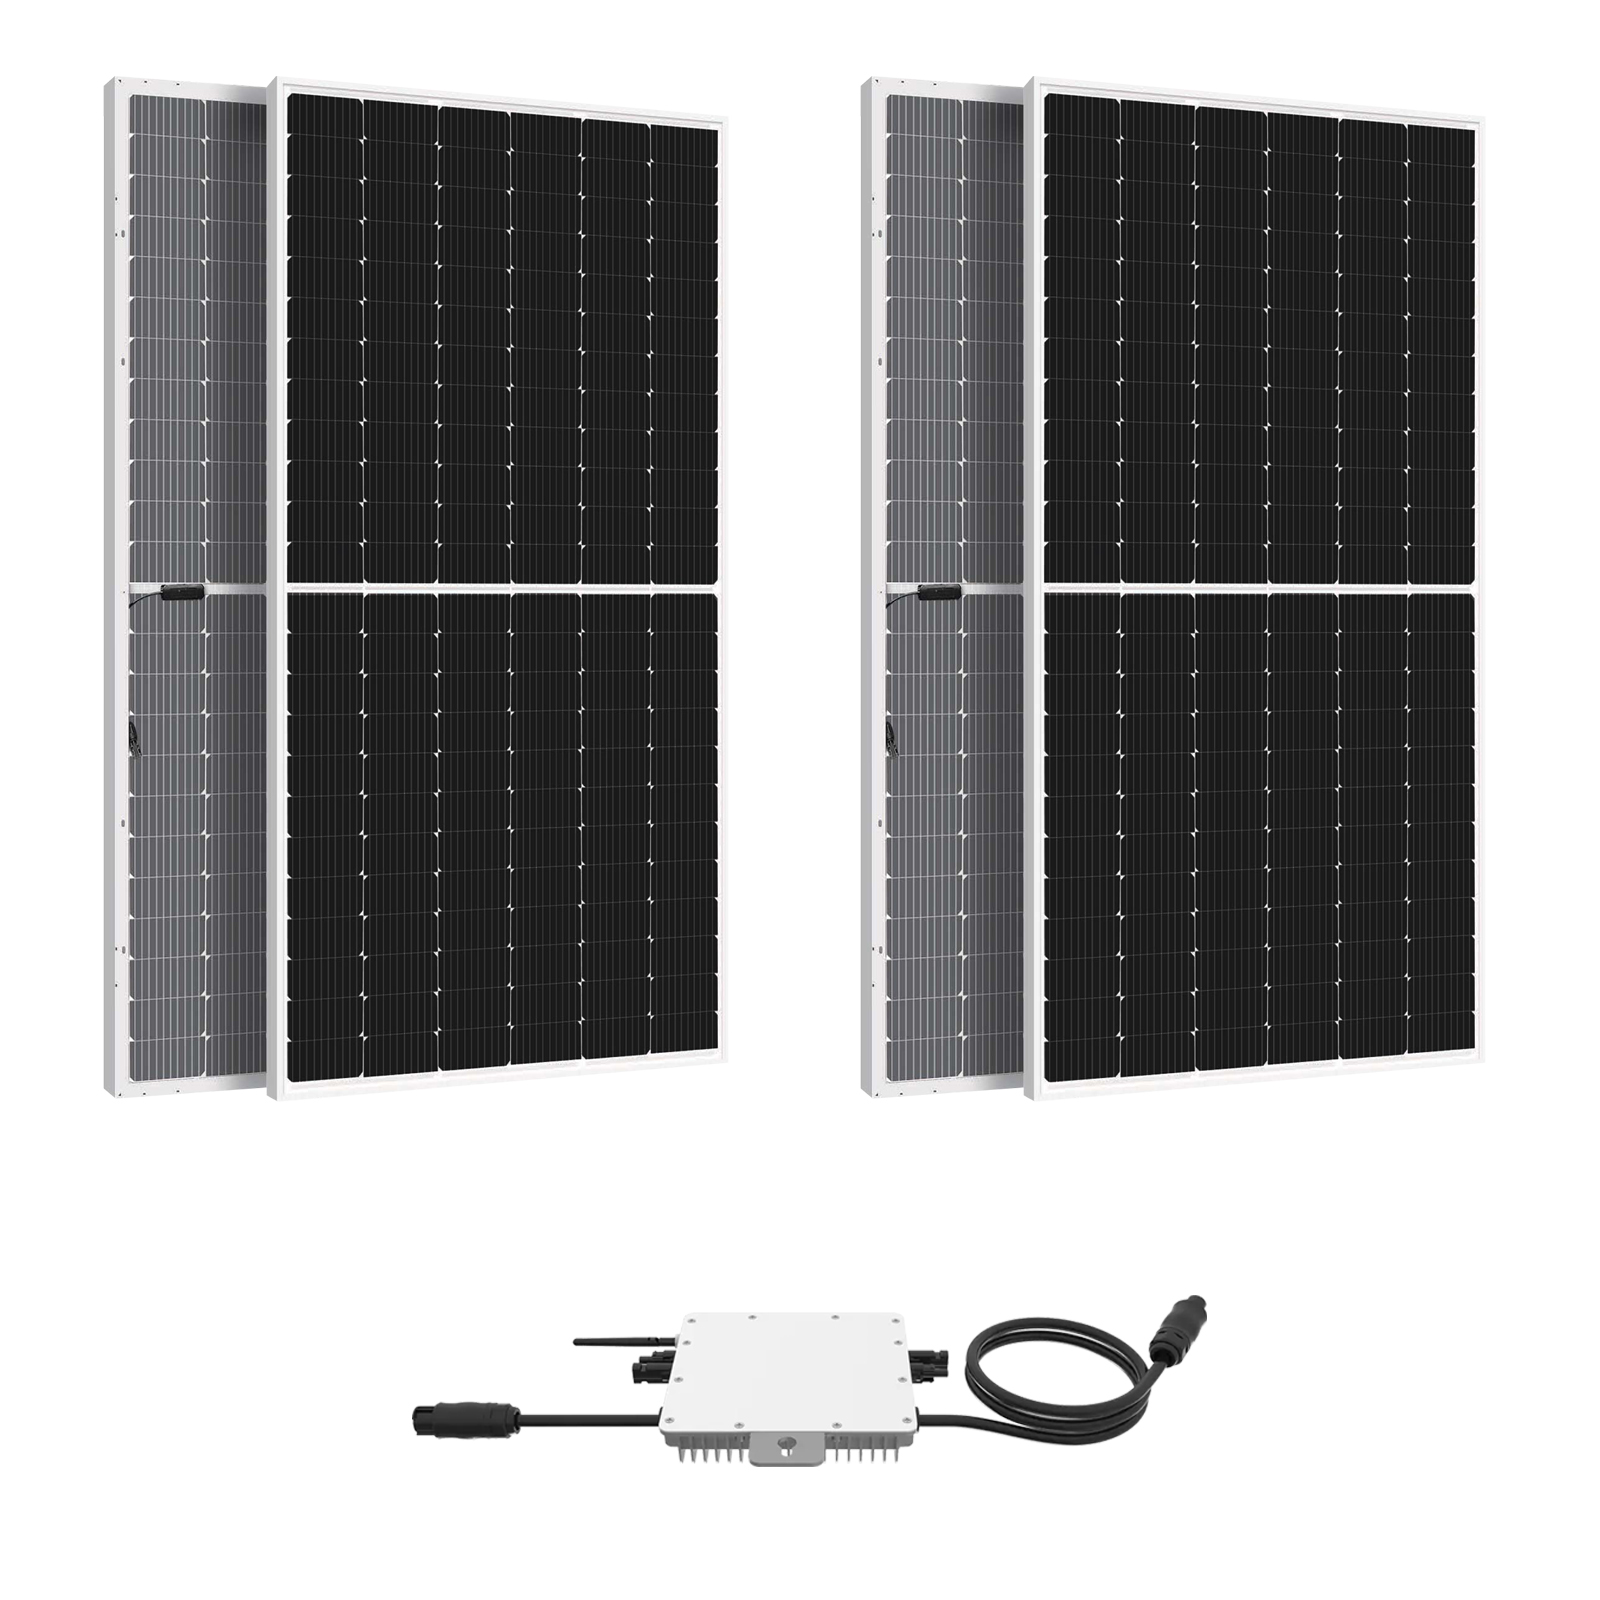 Solar-PV 780 Balkonkraftwerke Komplettset – Mit Bifazial Solarmodul Balkonsystem